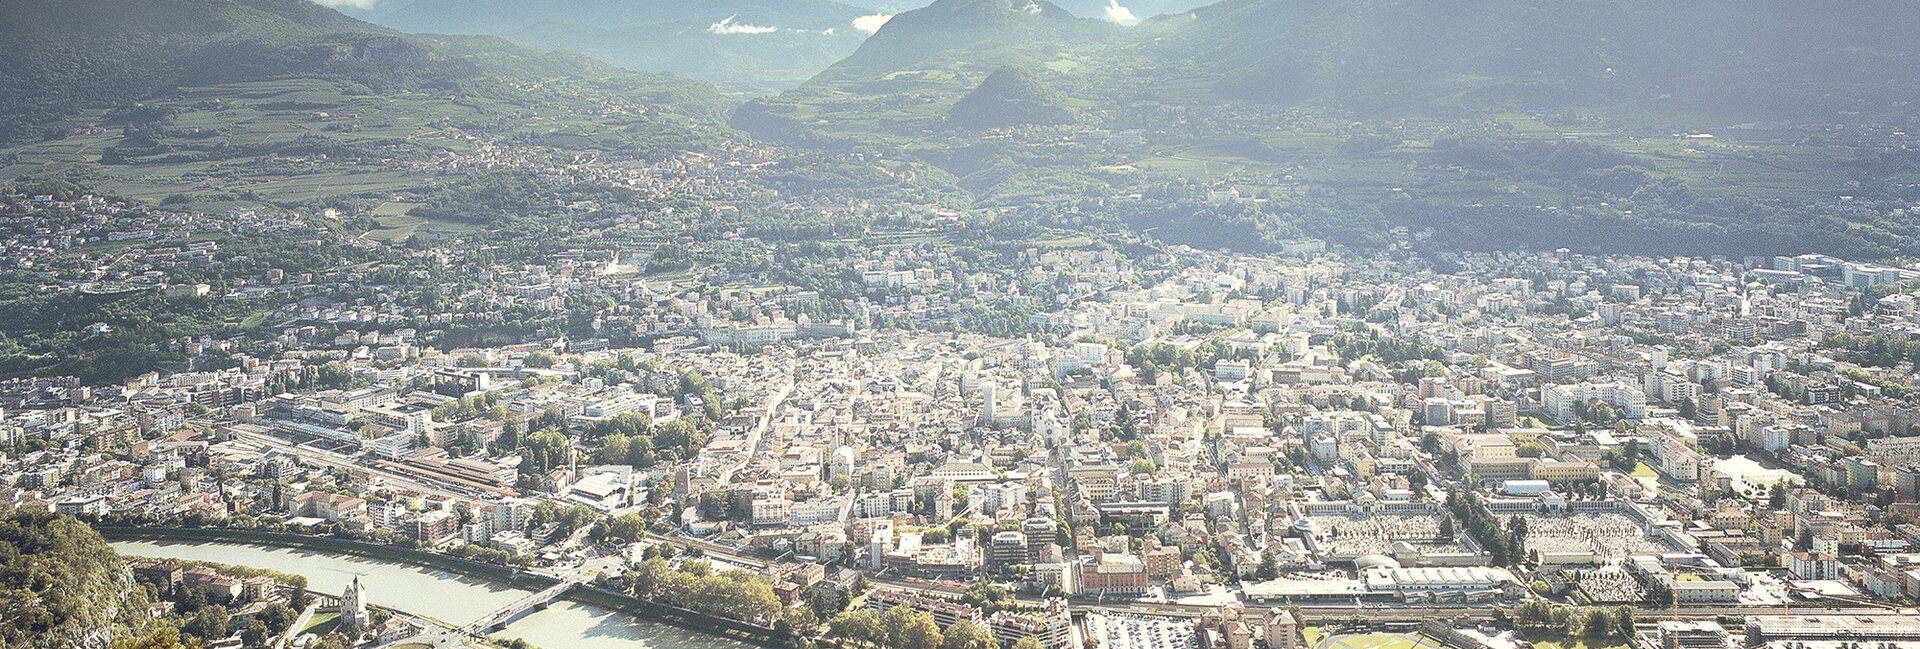 Trento, Monte Bondone a náhroní plošina Piné